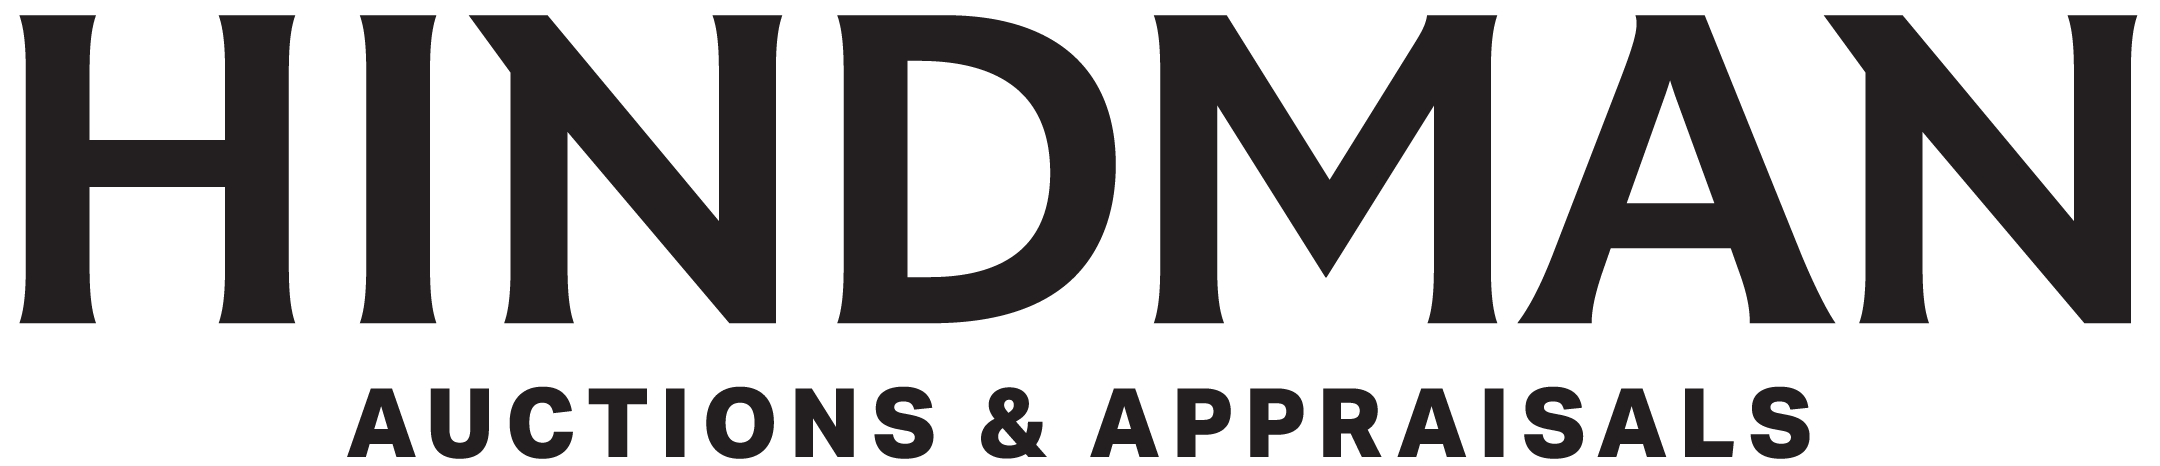 Hindman Auction and Appraisals logo